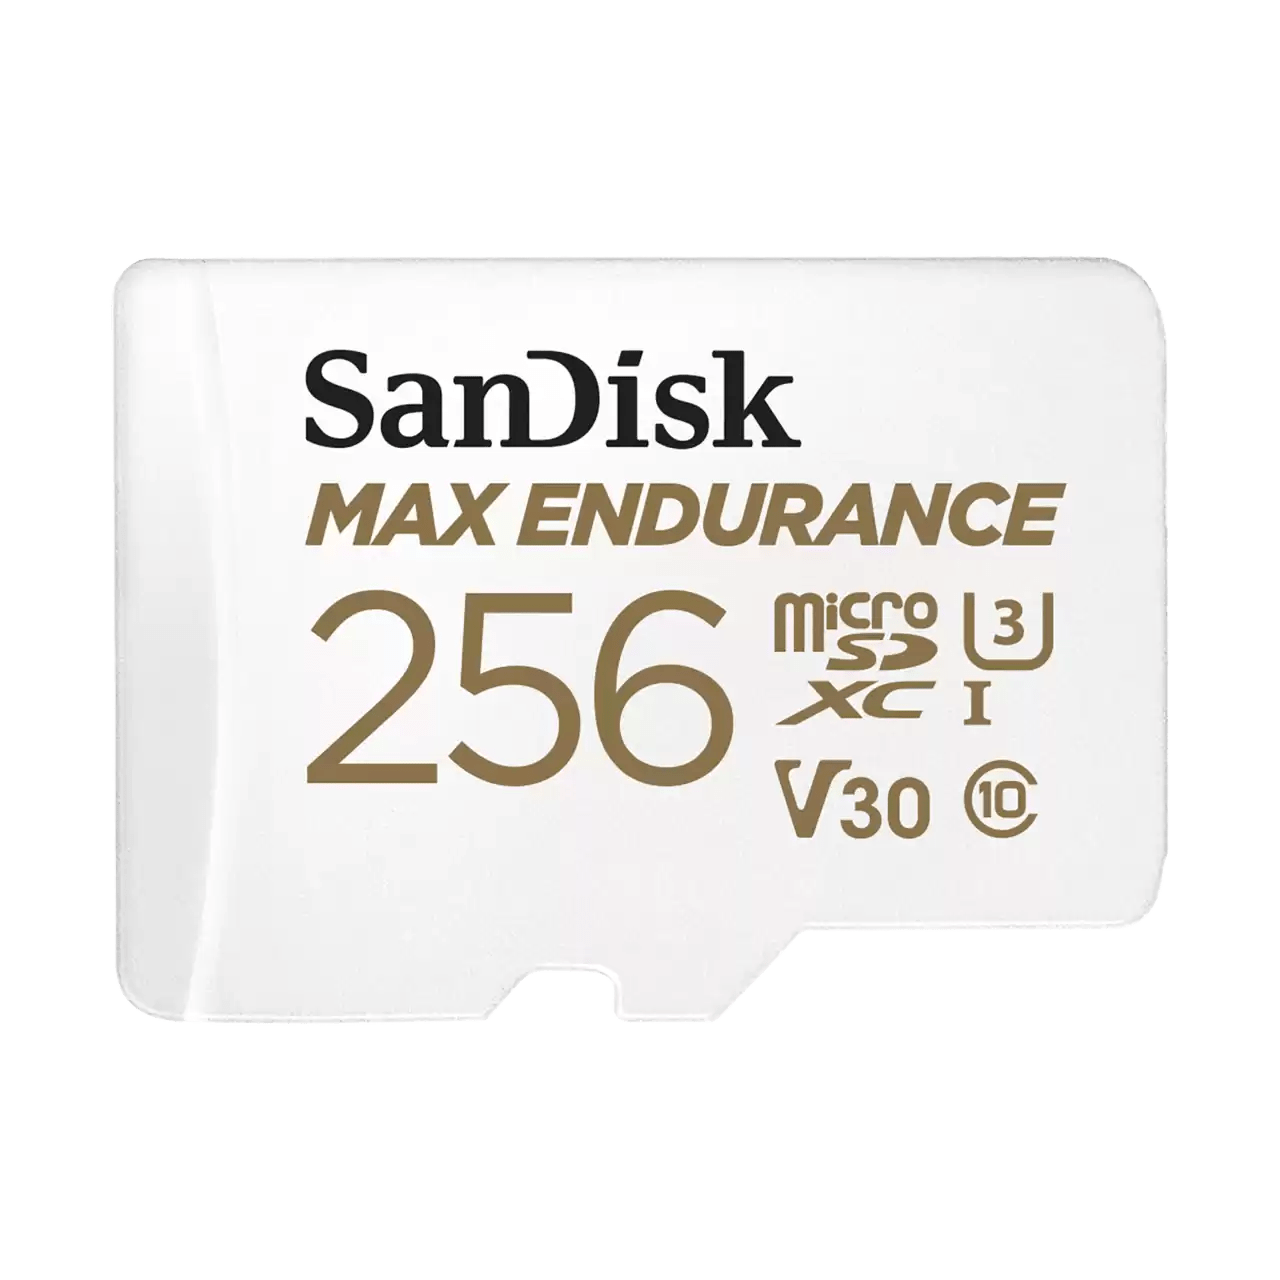 SanDisk Max Endurance 256GB V30 U3 C10 UHS - I microSDXC 記憶卡 (SDSQQVR - 256G - GN6IA) - Fever Electrics 電器熱網購平台